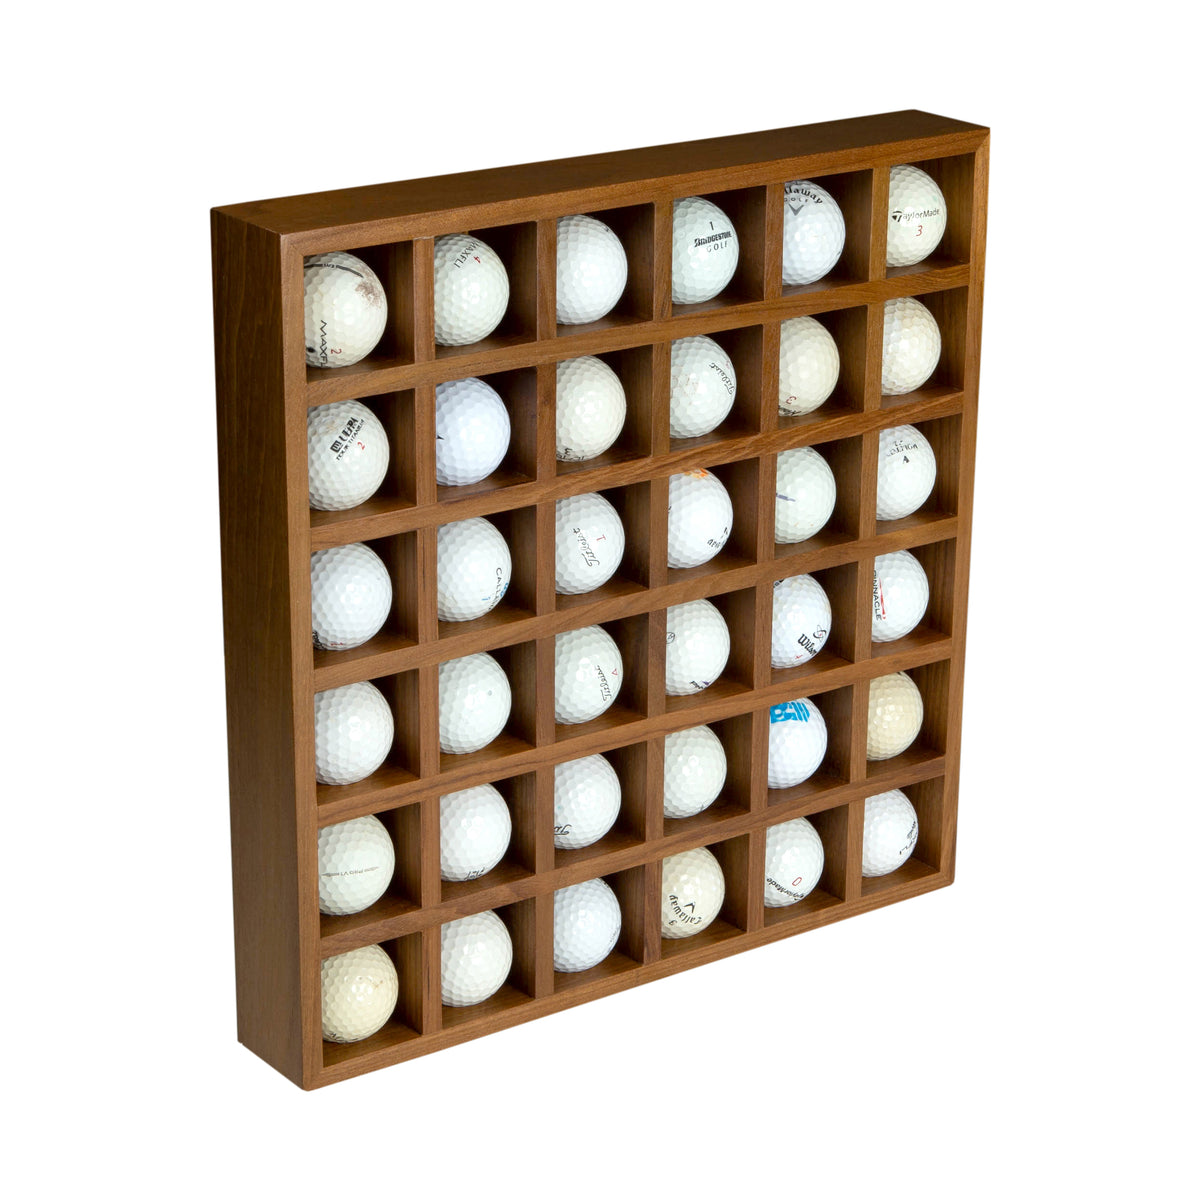 36 Golf Ball Holder/Display - 60455